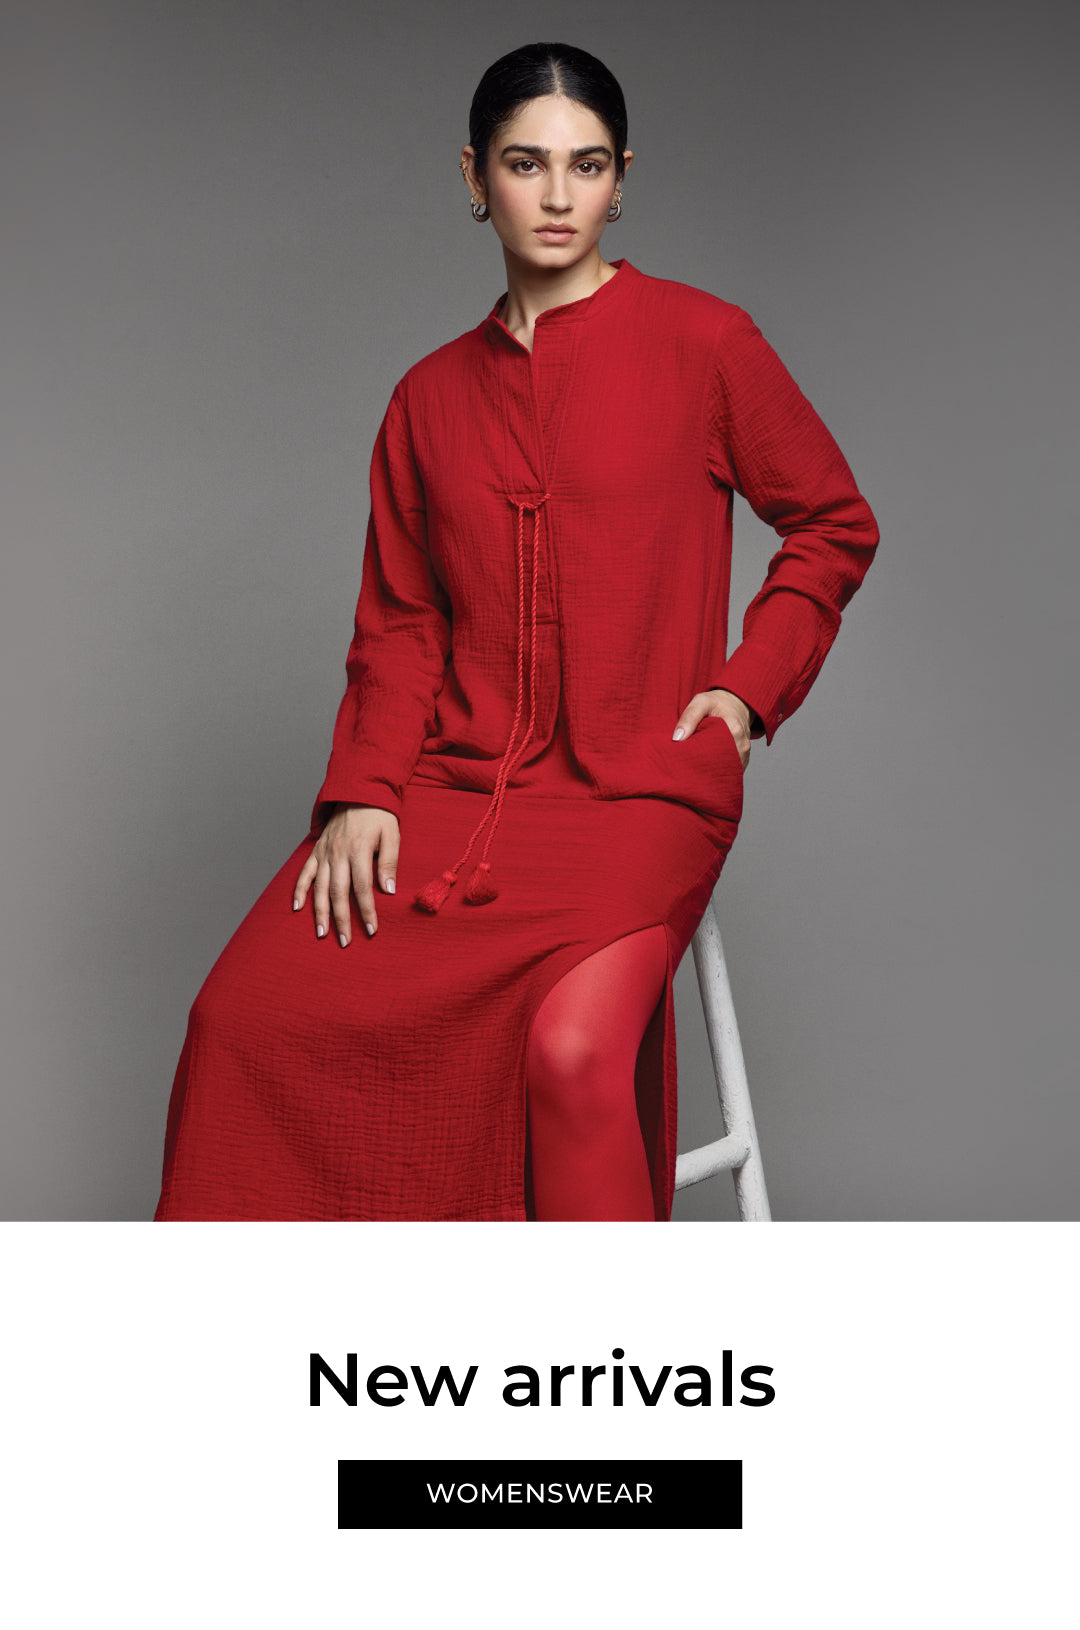 Round Neck Cotton Slip, Ethnic Wear Undergarments, Women's Innerwear for  Ethnic Wear, Red Inner Slip for Kameez, Sleeveless Top Dress Lining -   Canada